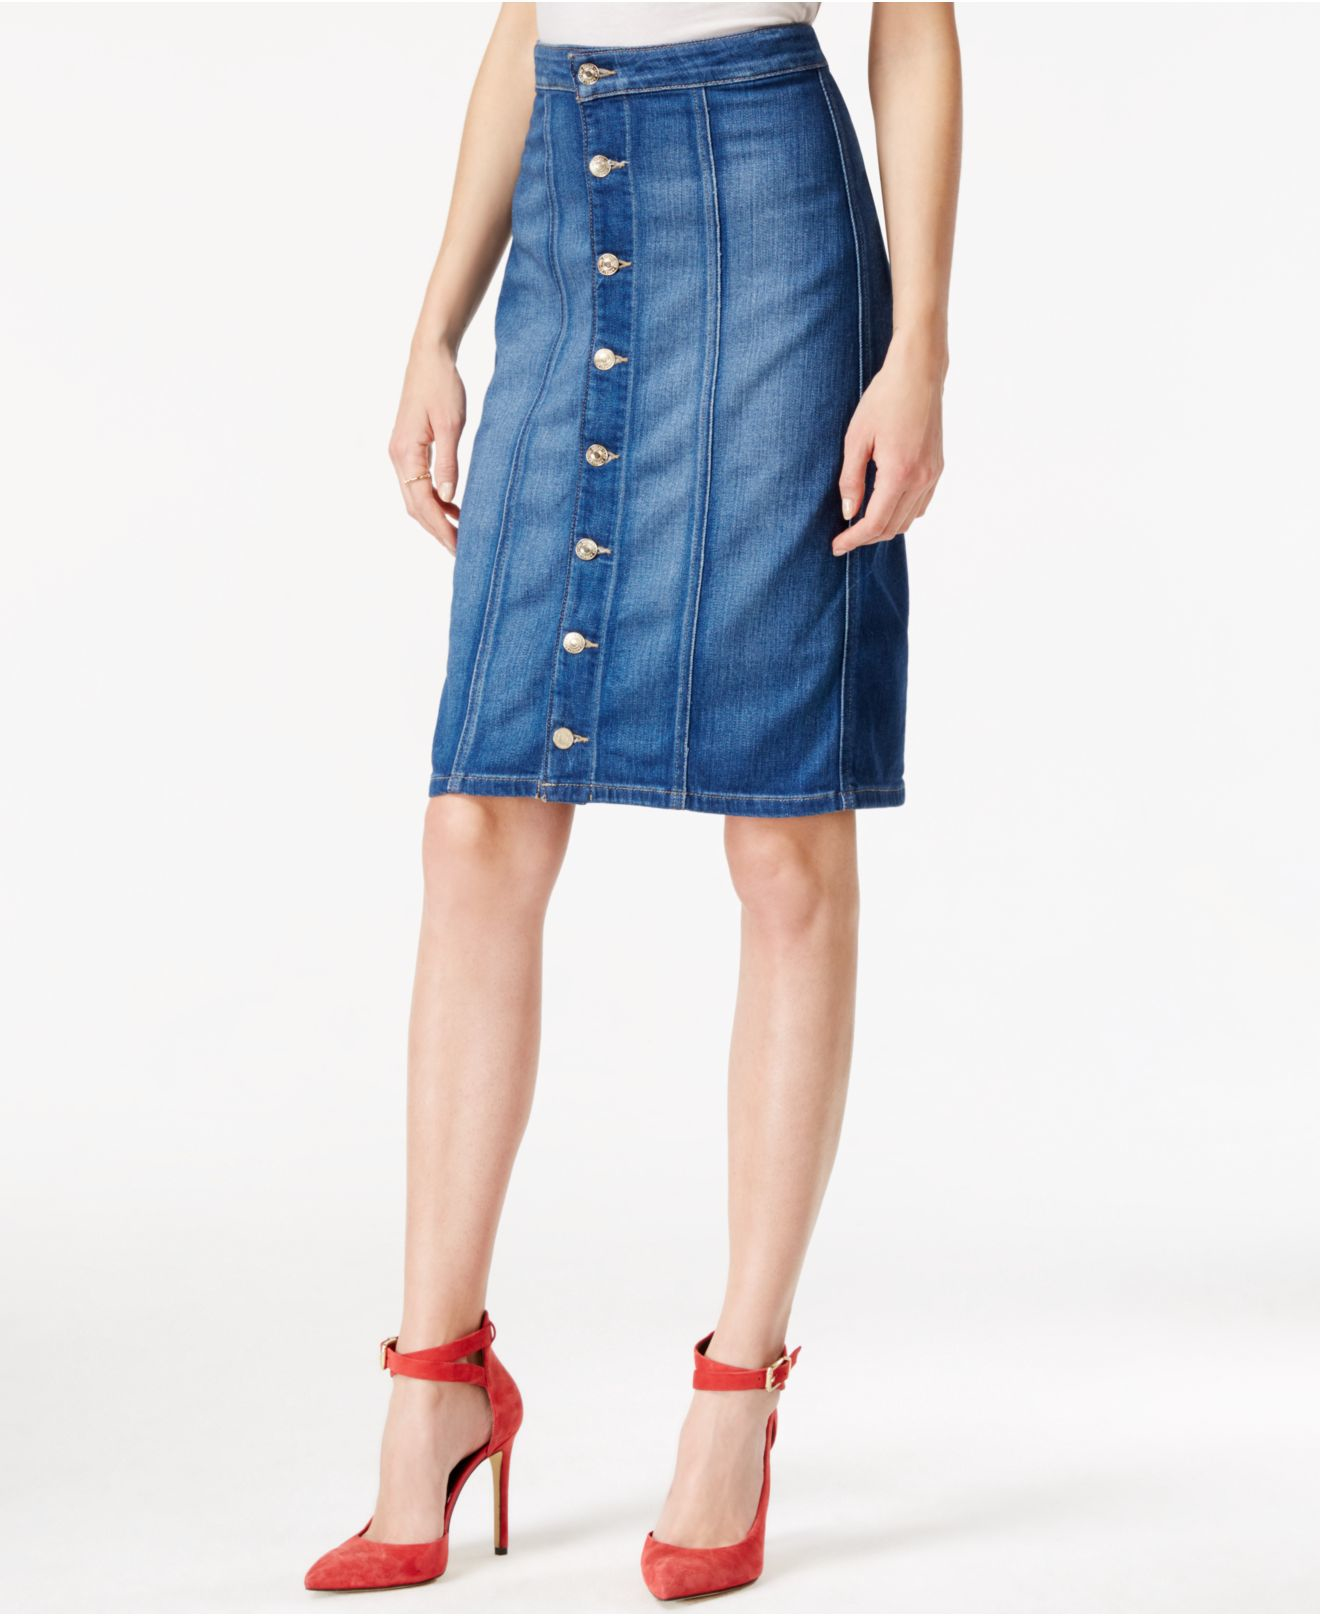 Lyst - Guess Button-front Denim Skirt in Blue